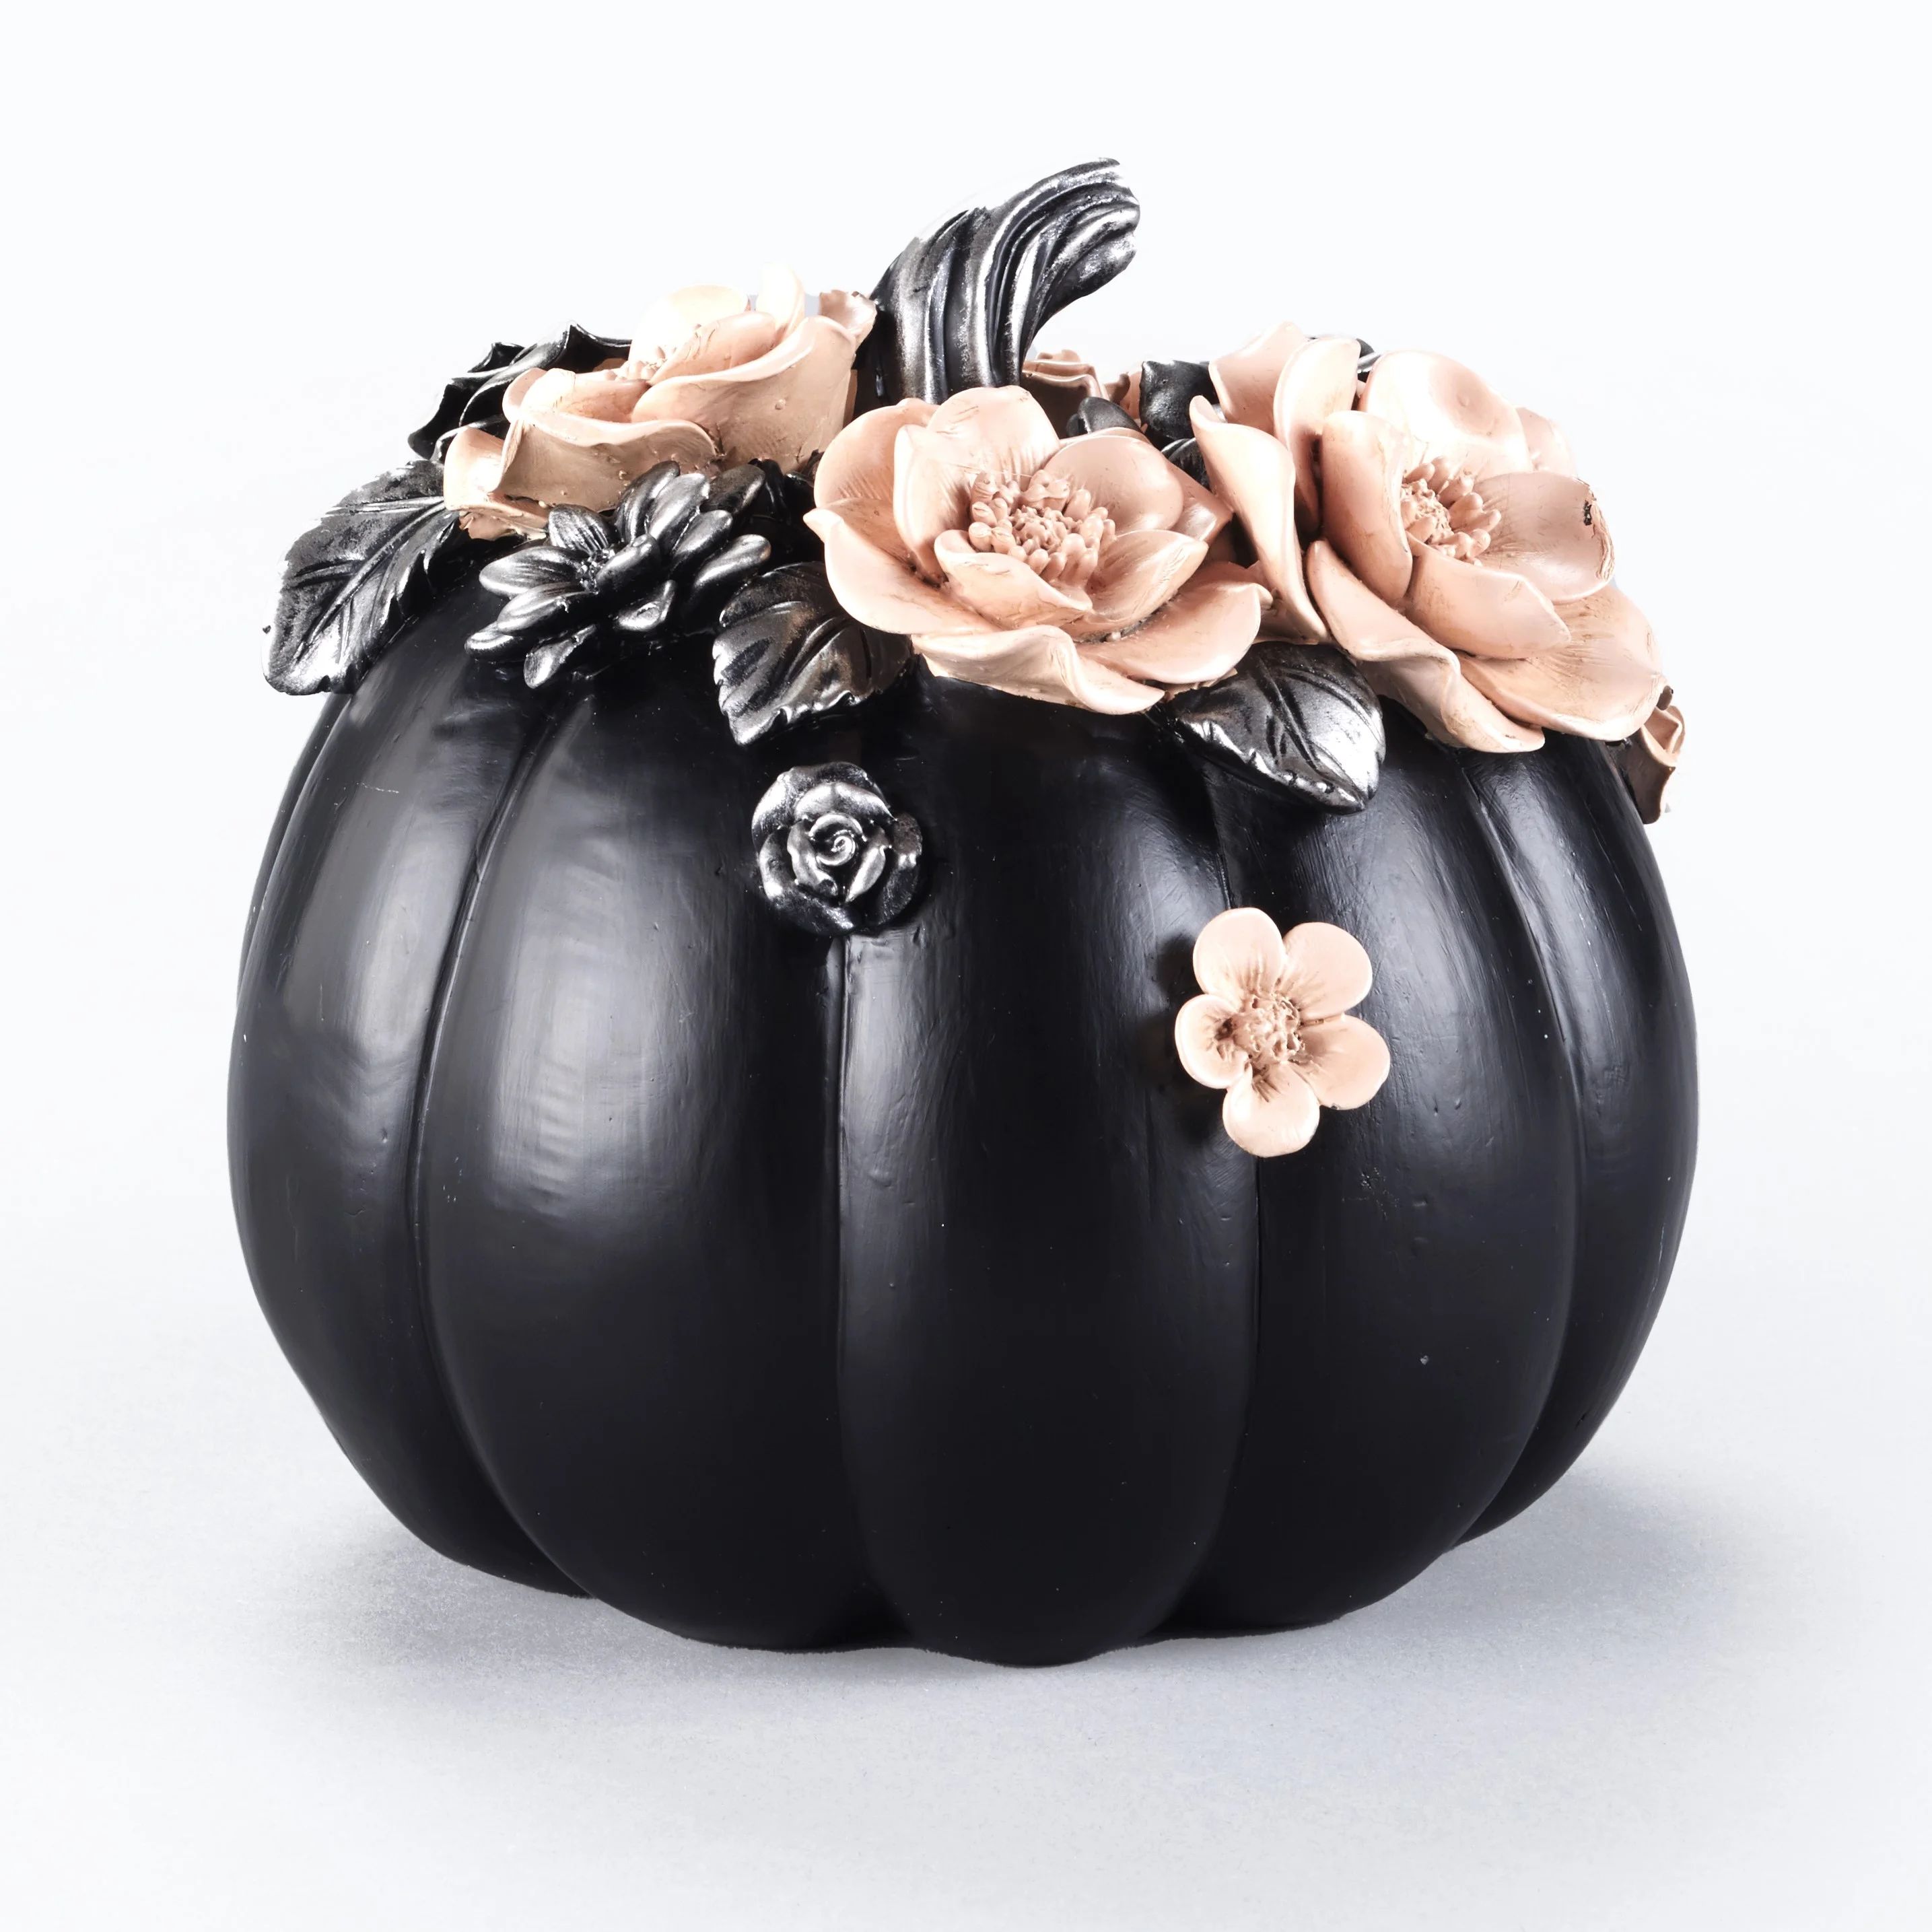 Ceramic Pumpkin with Floral Sculptures - Harvest Halloween Table Decoration | Walmart (US)